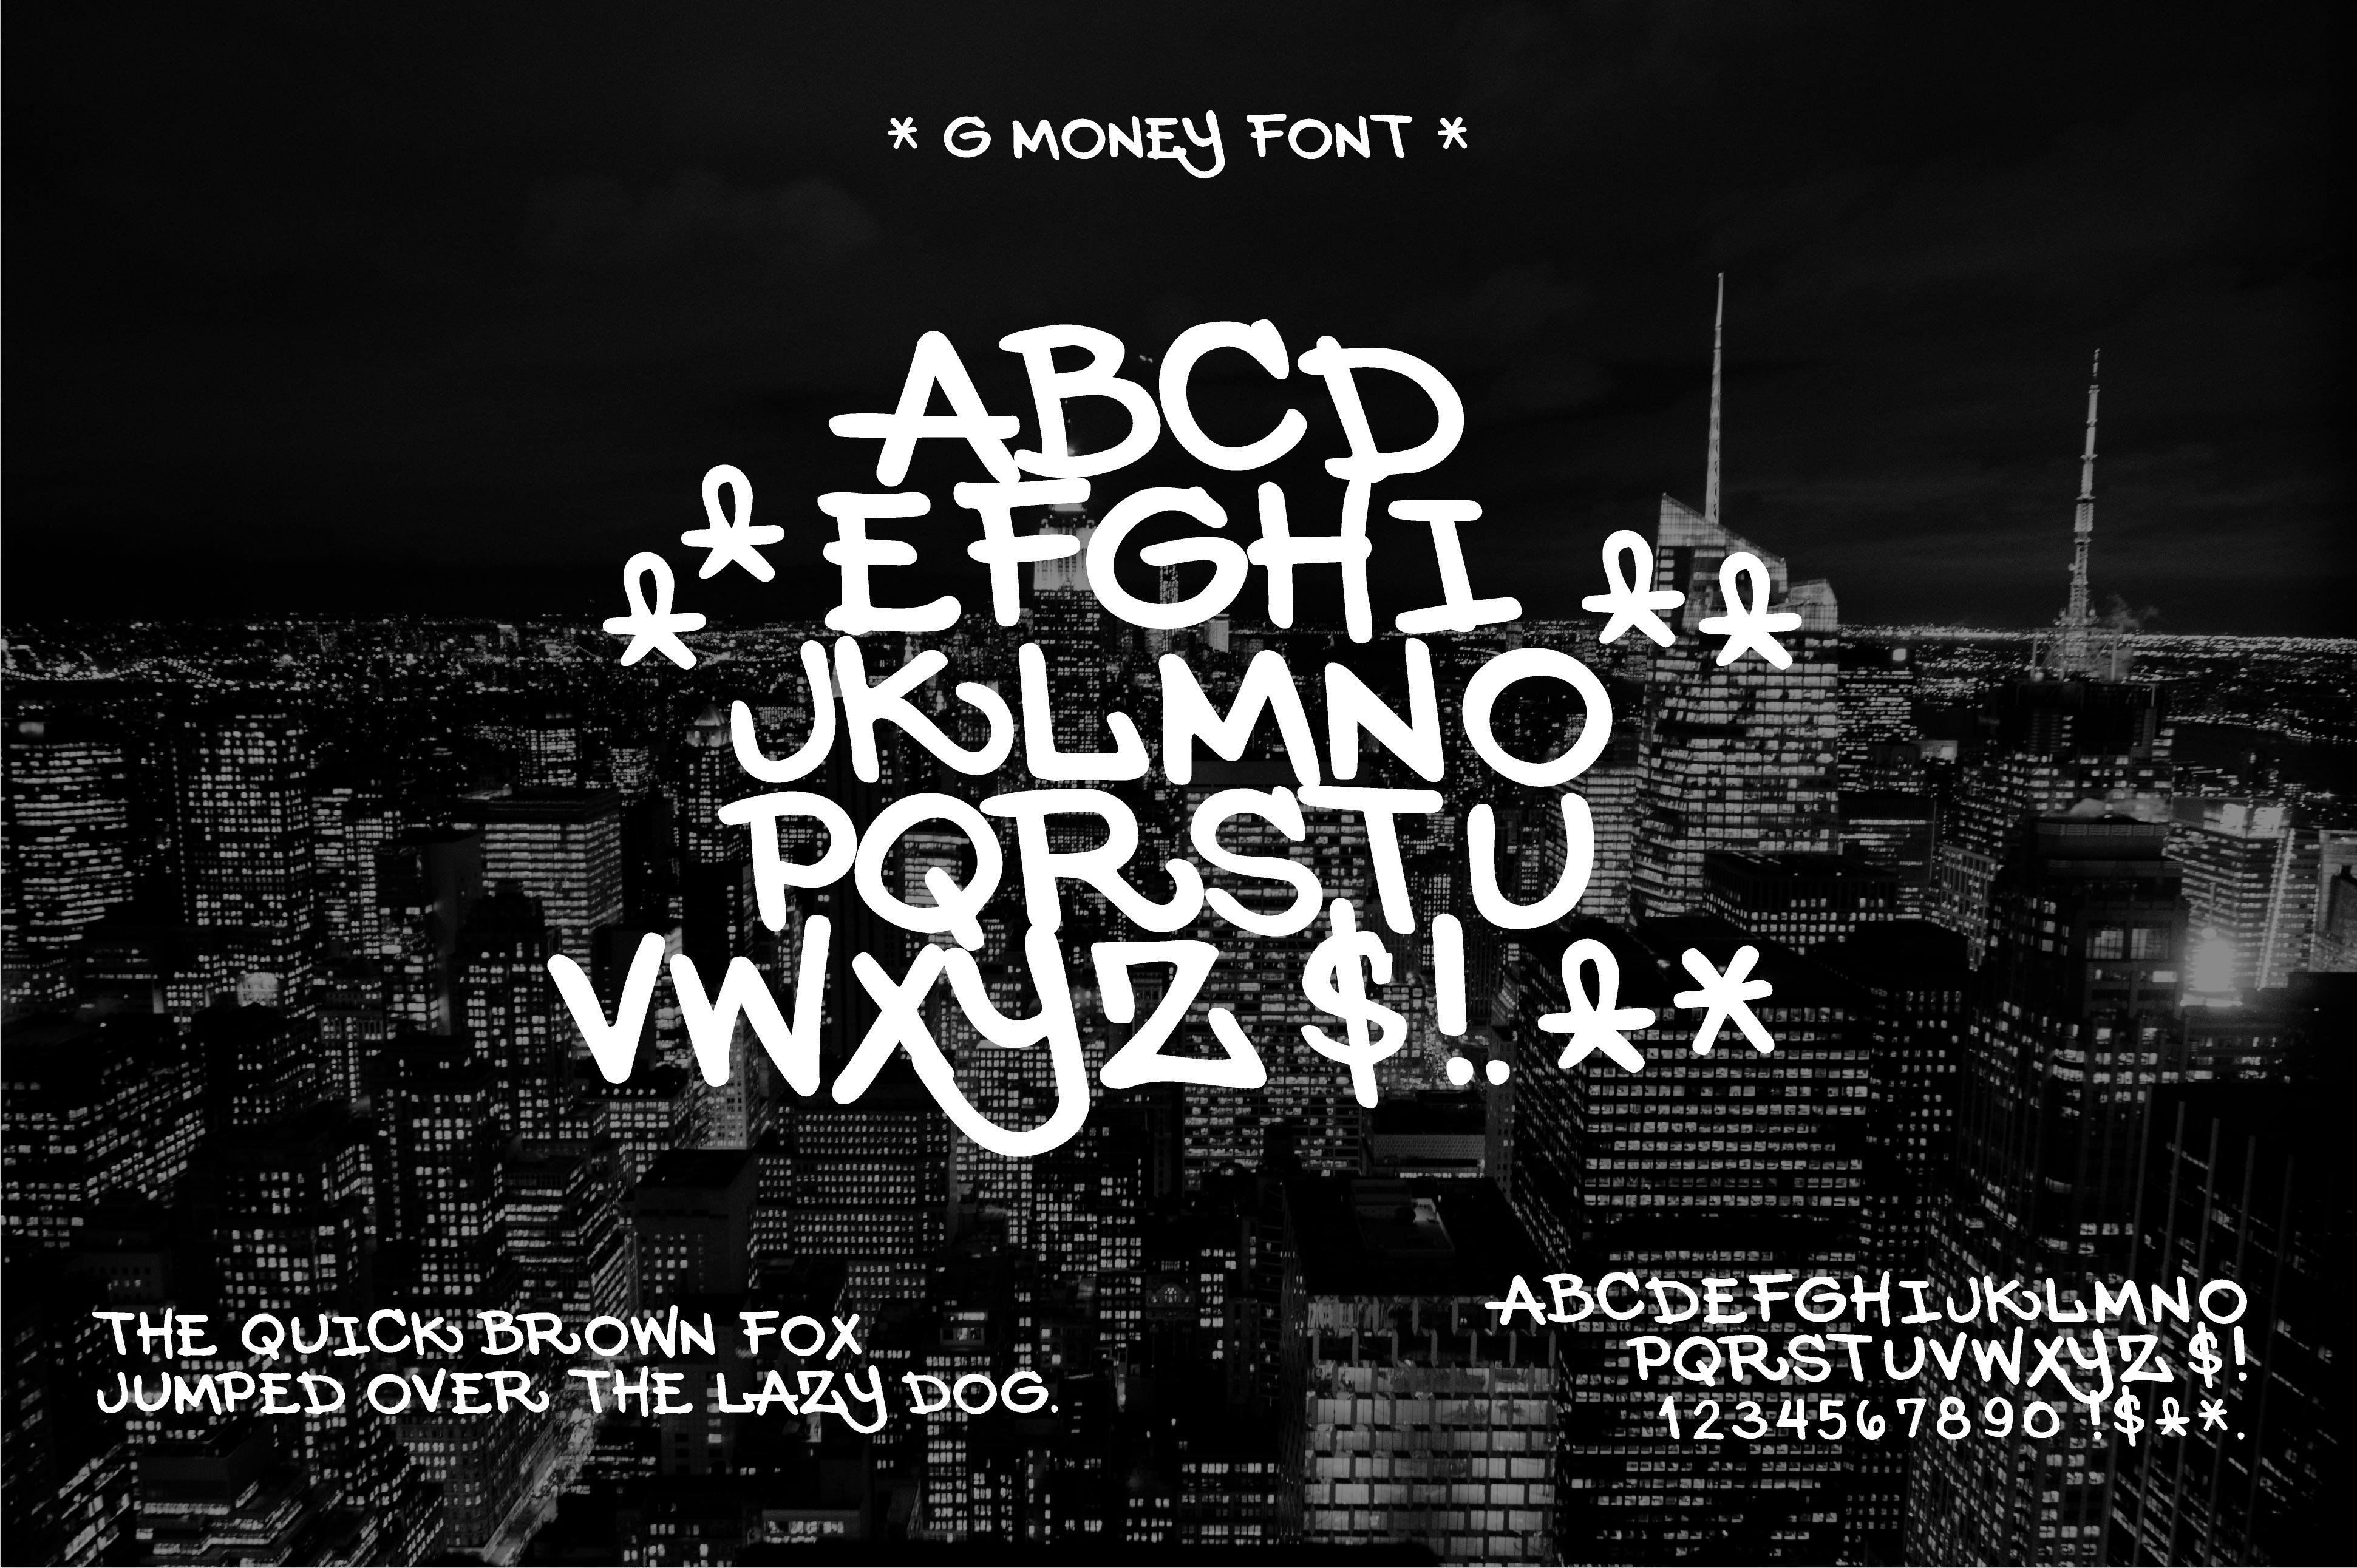 G-Money Font cover image.